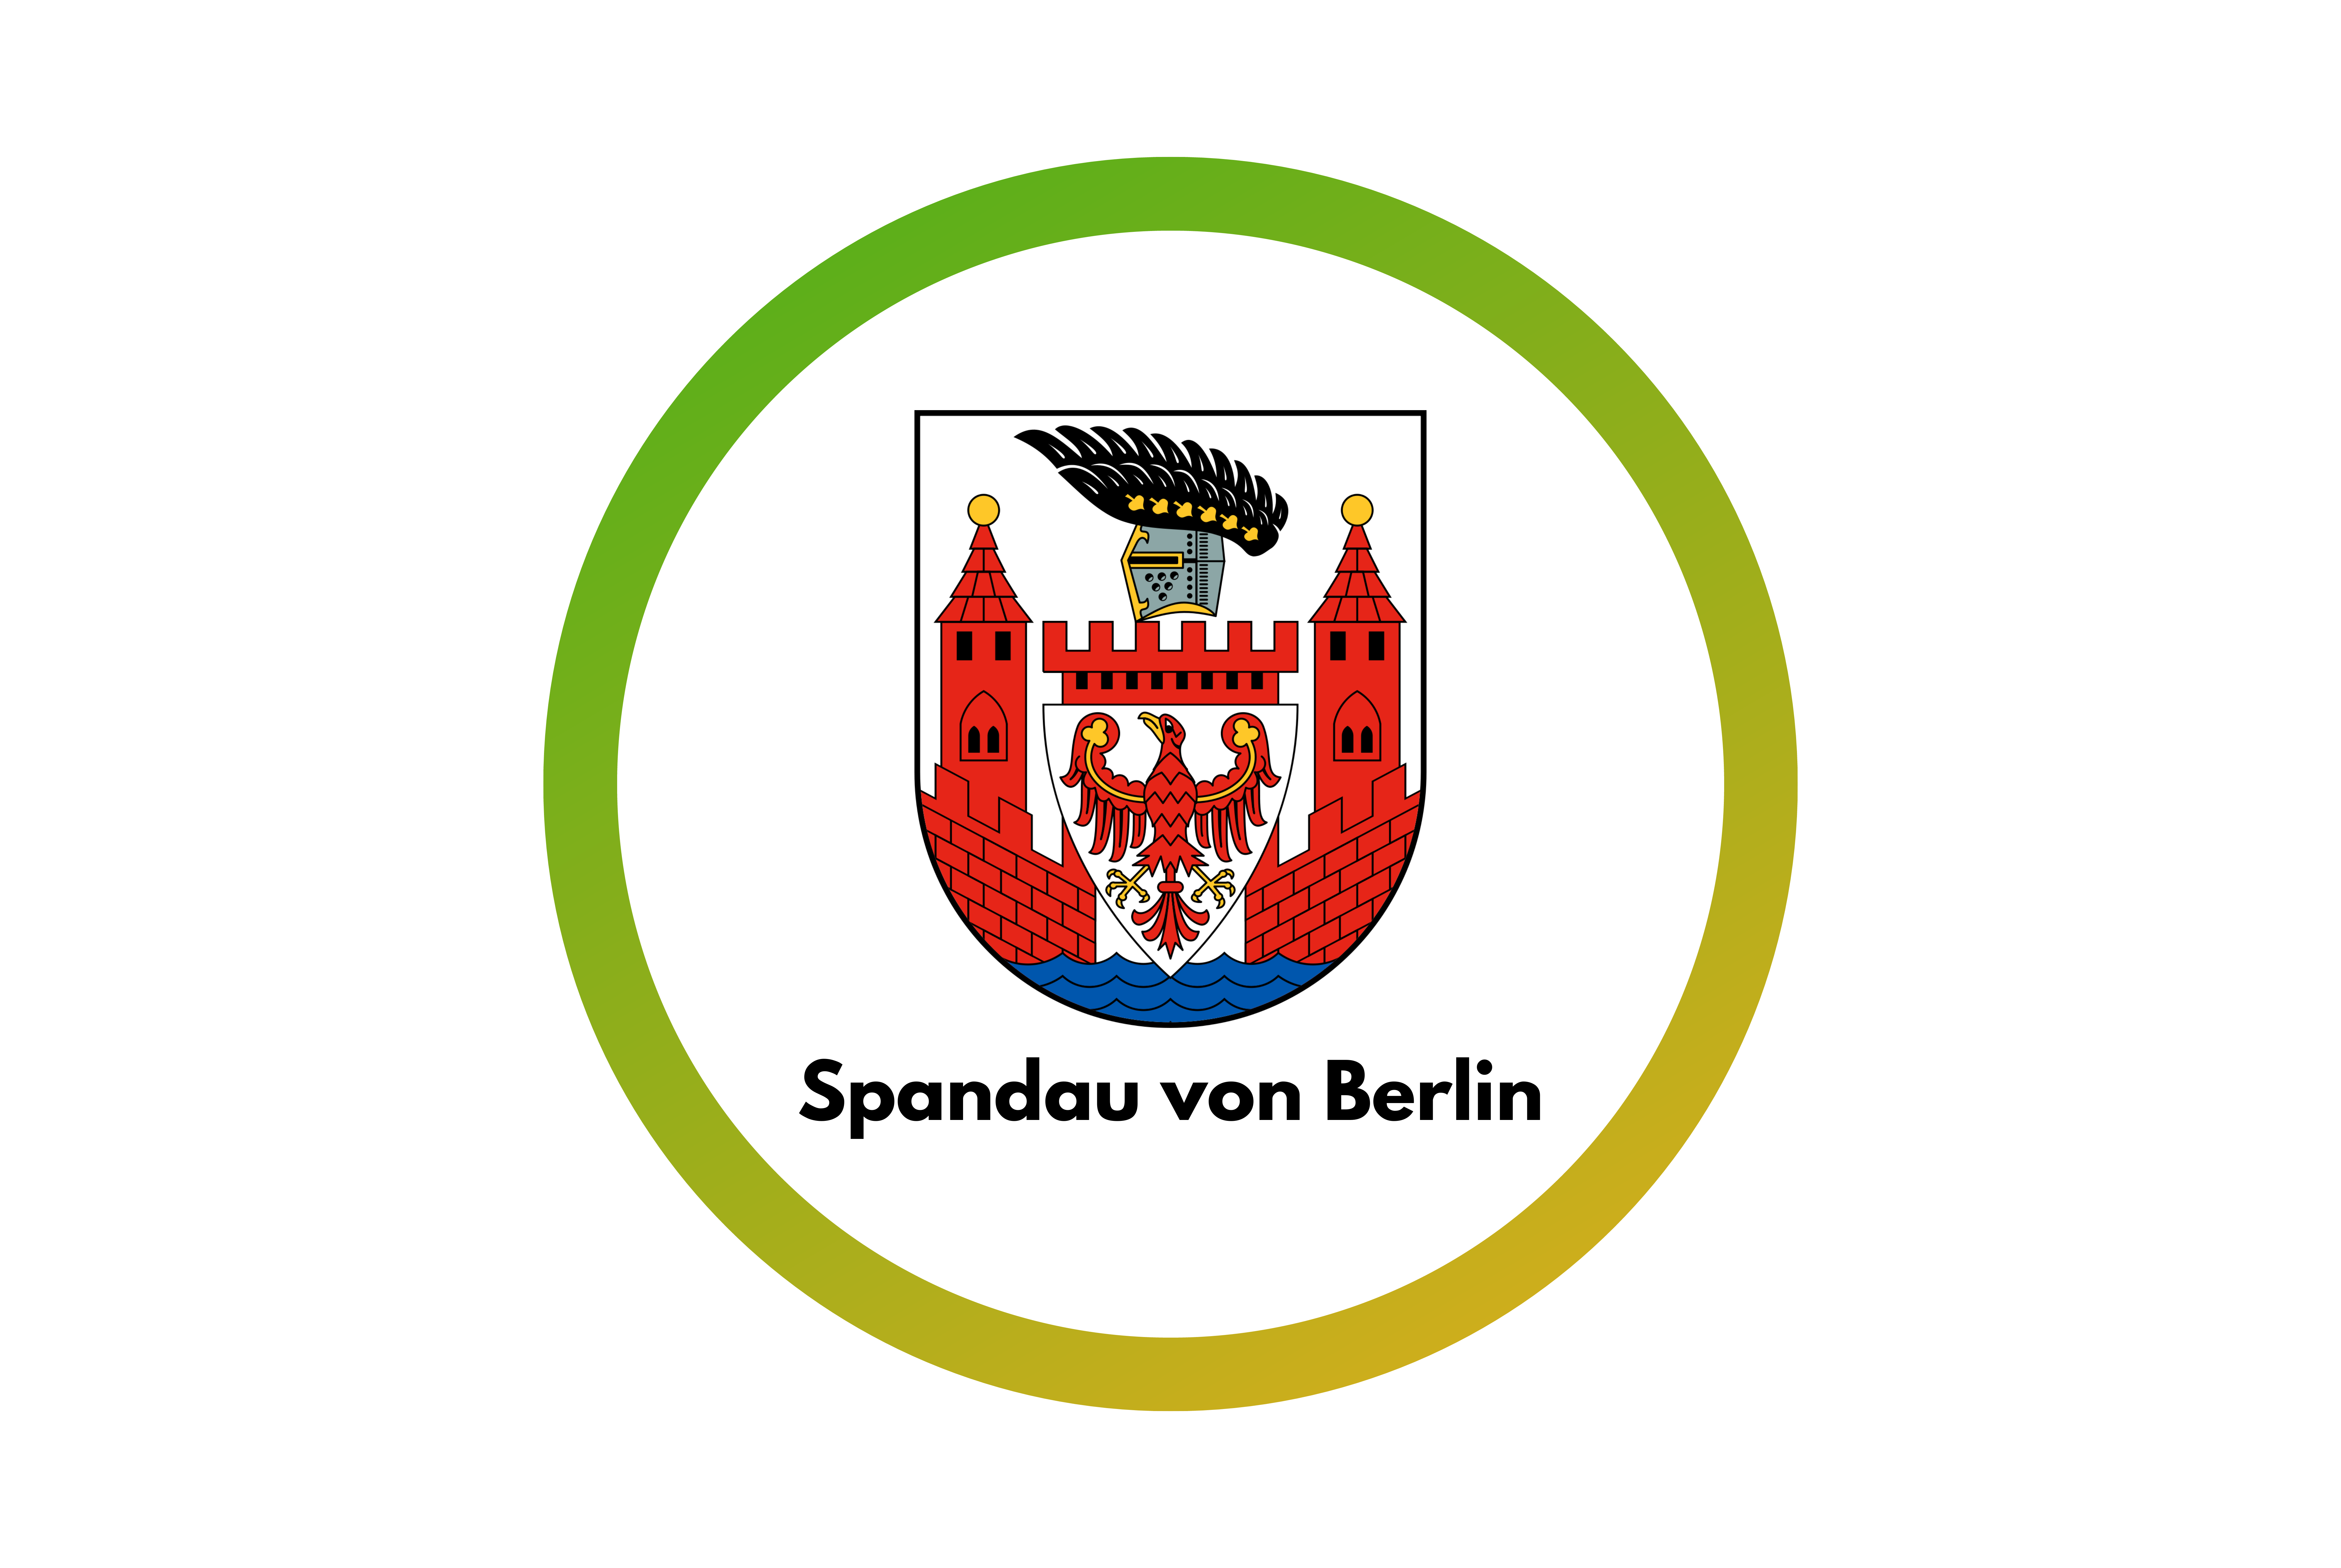 Spandau - Borough of Berlin, Germany 